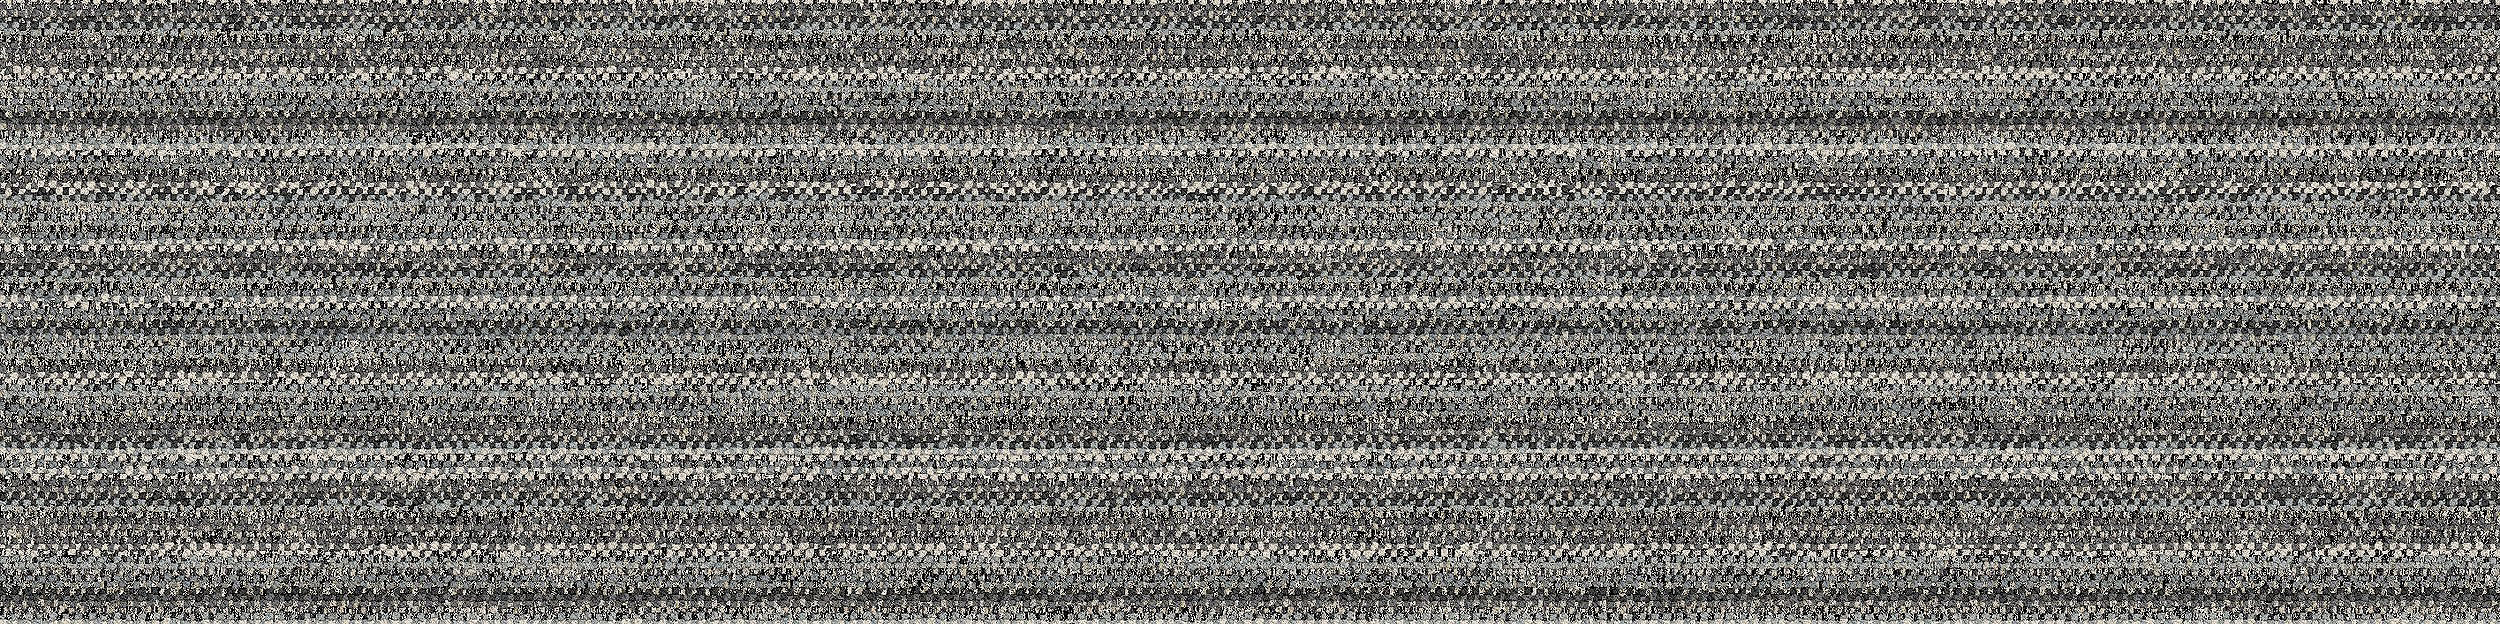 WW865 Carpet Tile In Moorland Warp image number 12